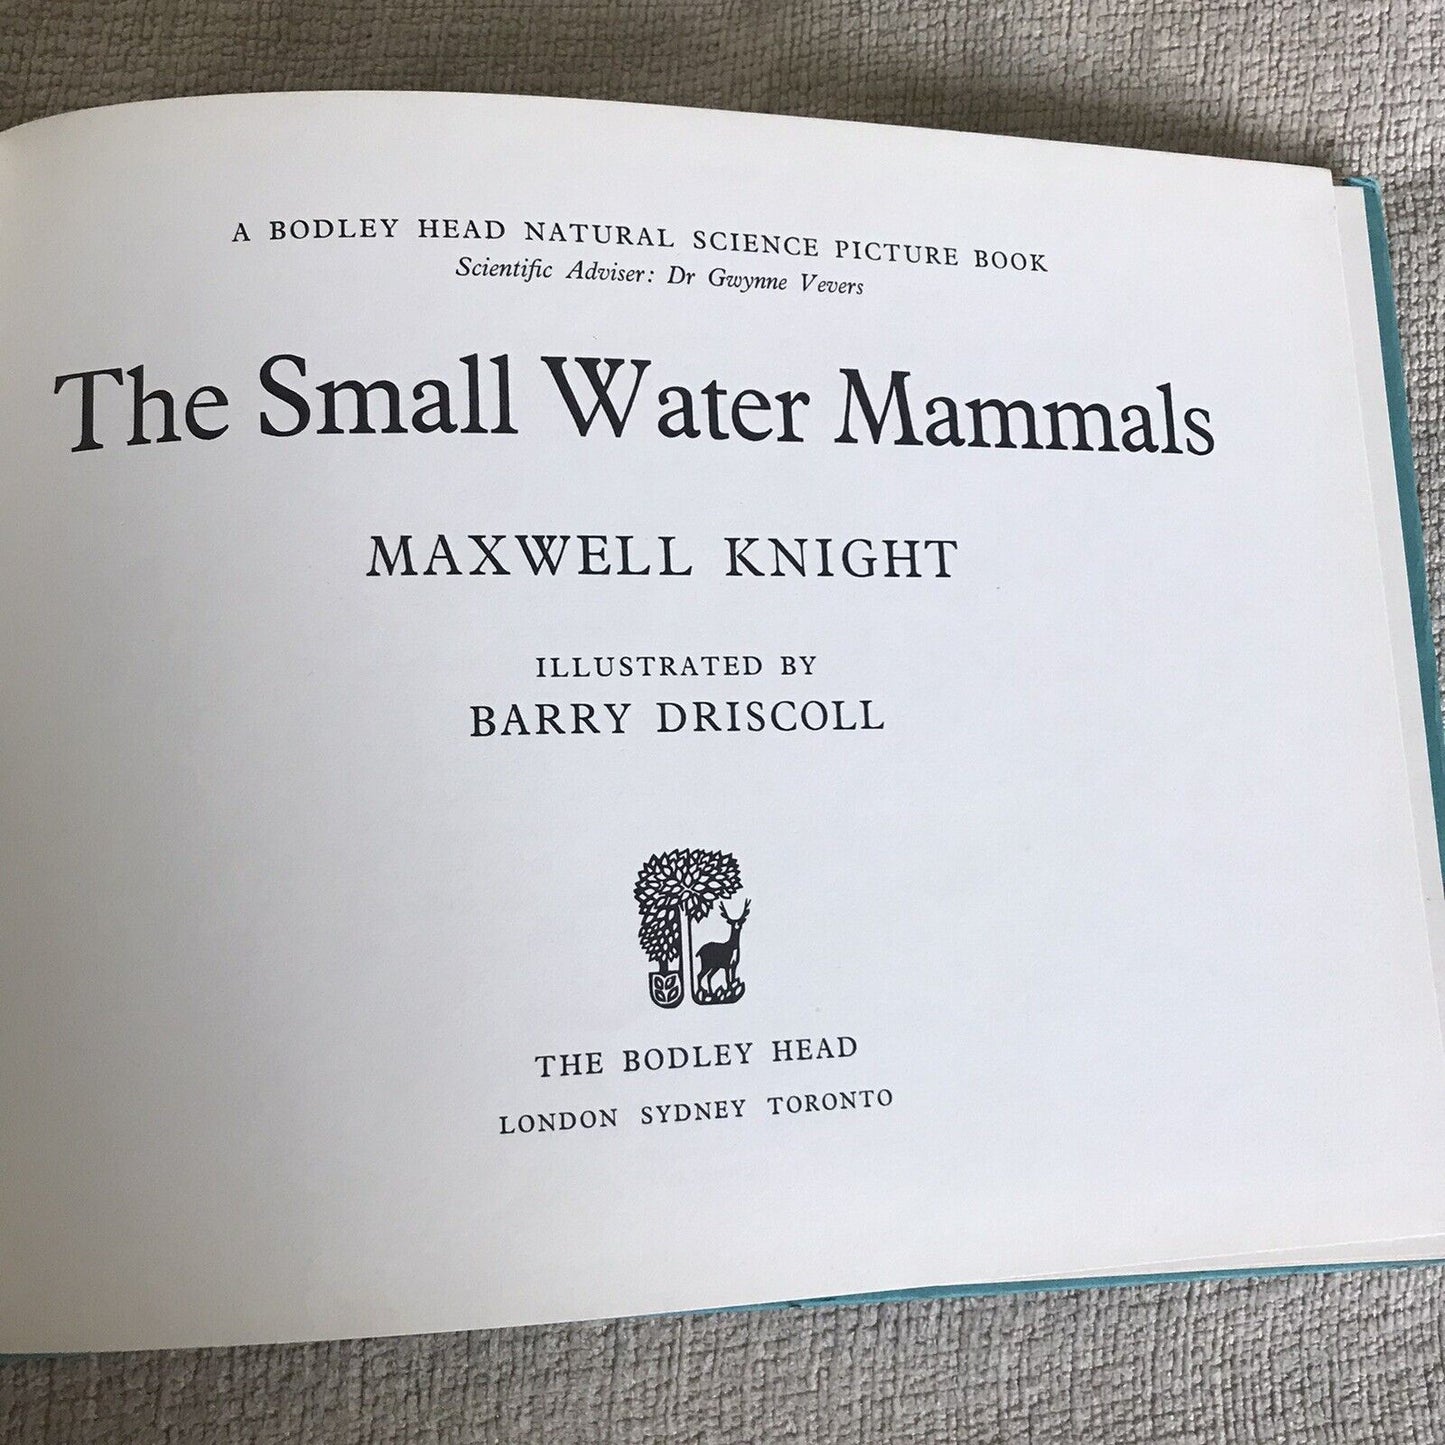 1972 The Small Water Mammals - Maxwell Knight (Barry Driscoll Illust) Bodley Hea